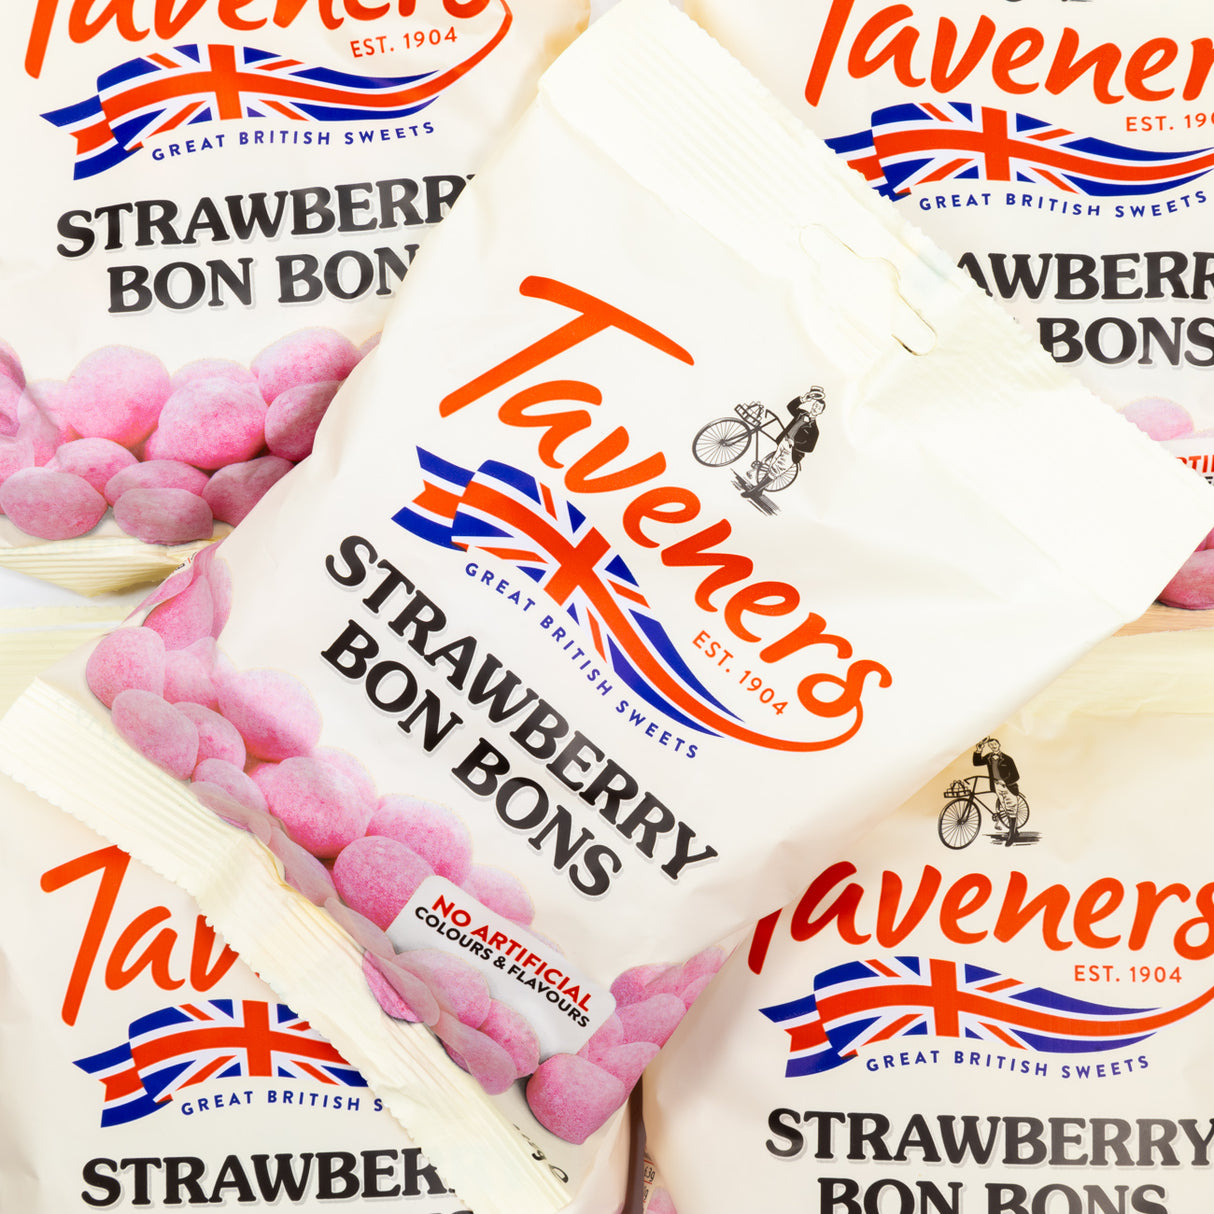 Taveners Sweets